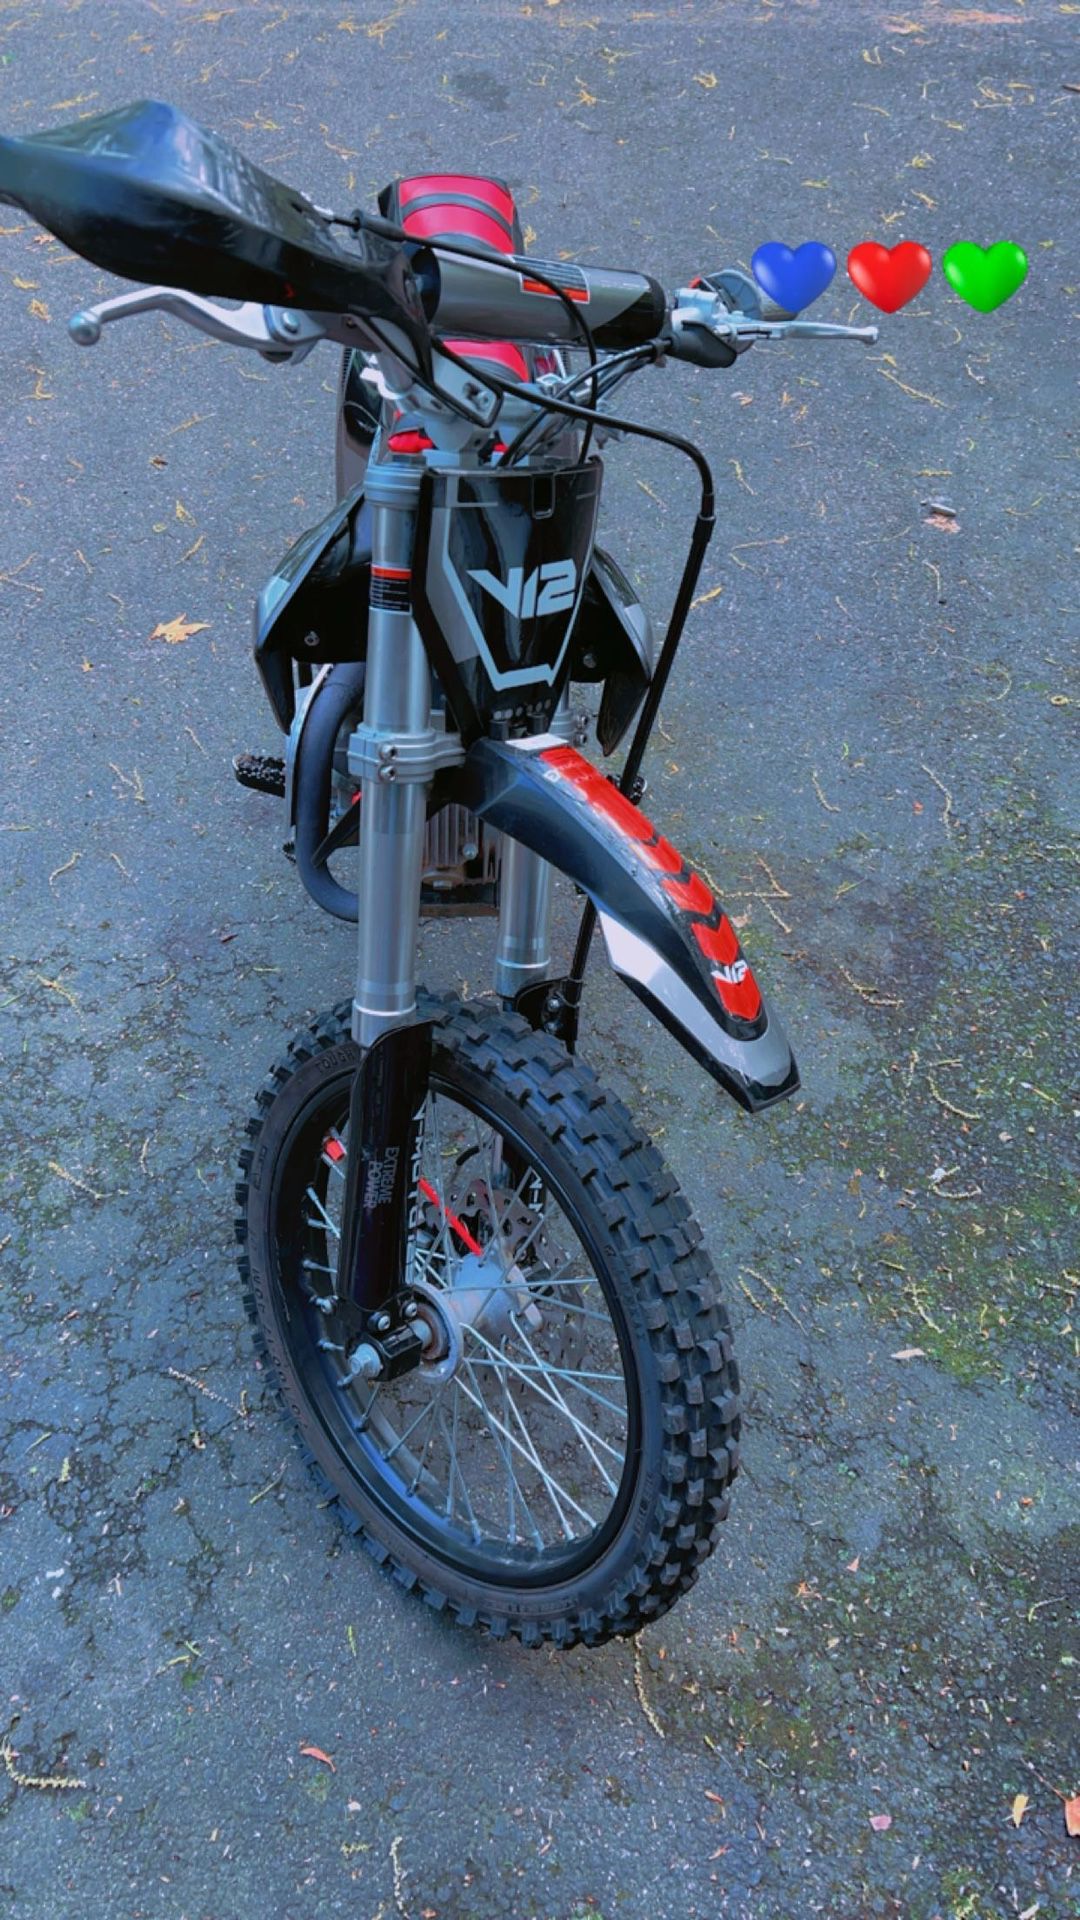 125 CC Dirt Bike for Sale